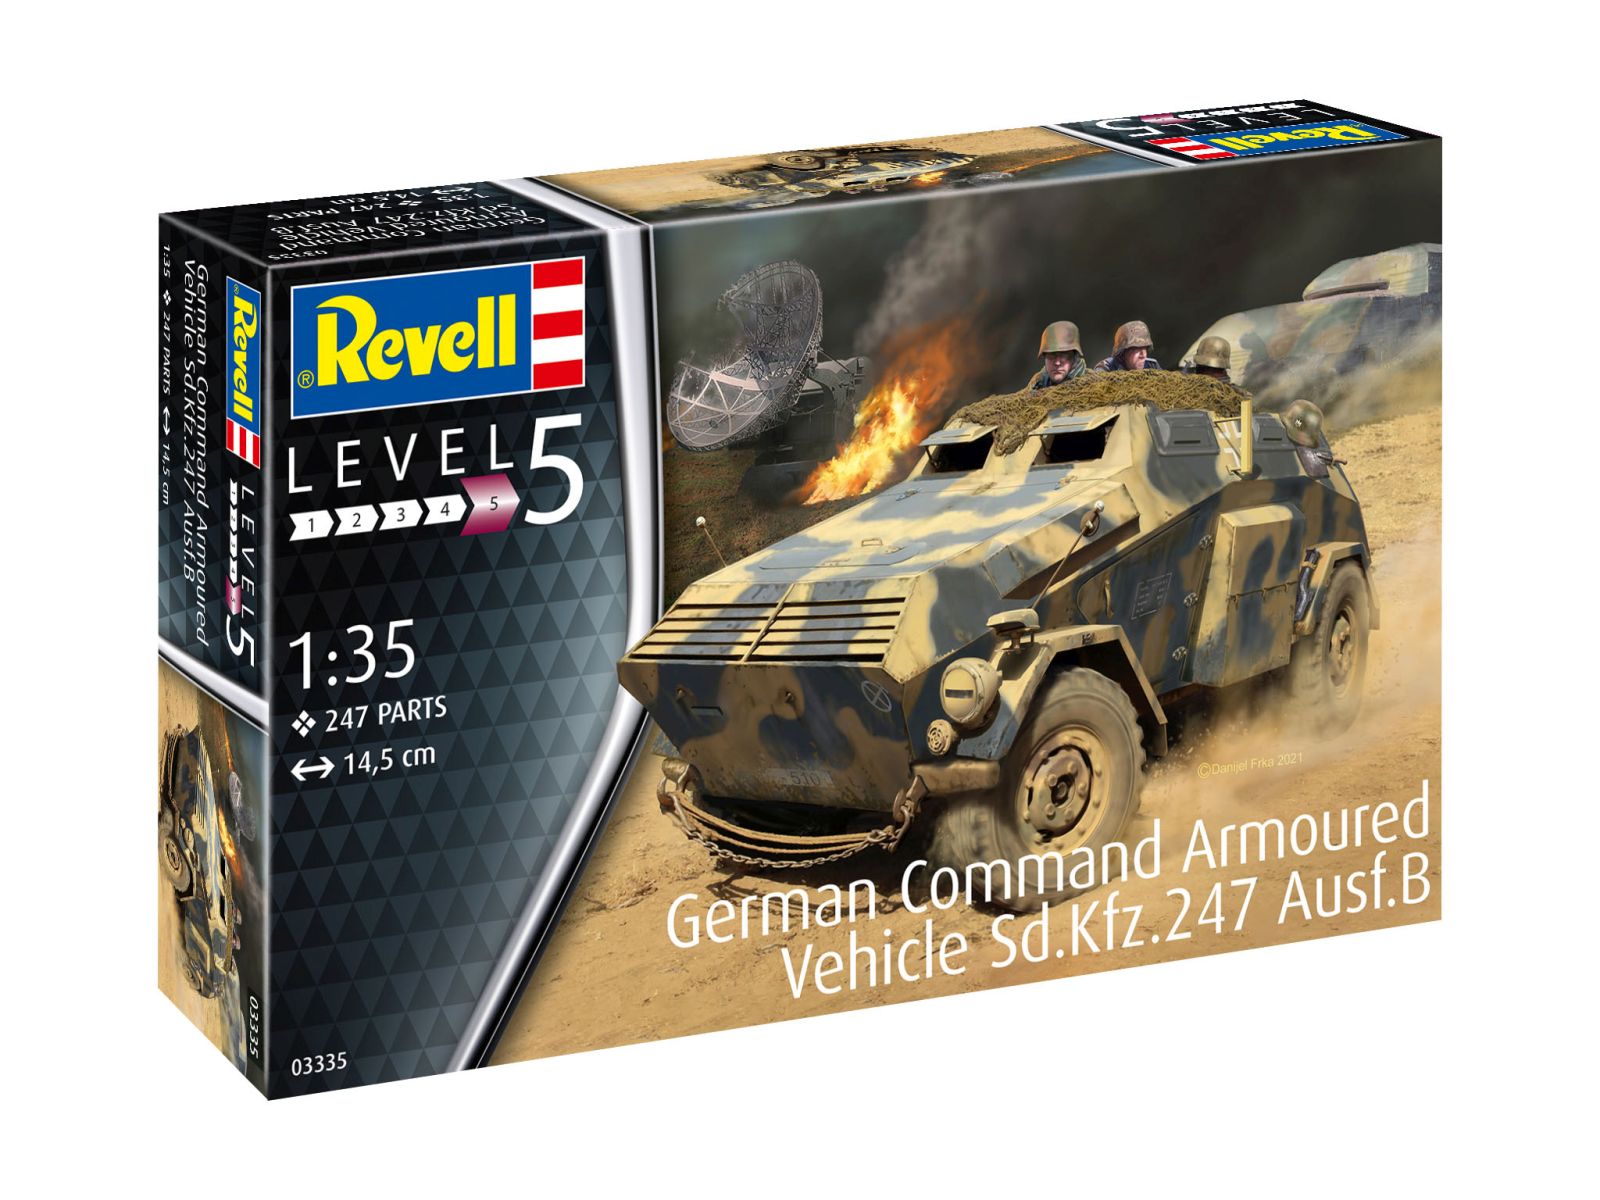 Revell 03335 - German Command Armoured Vehicle Sd.Kfz.247 Ausf.B